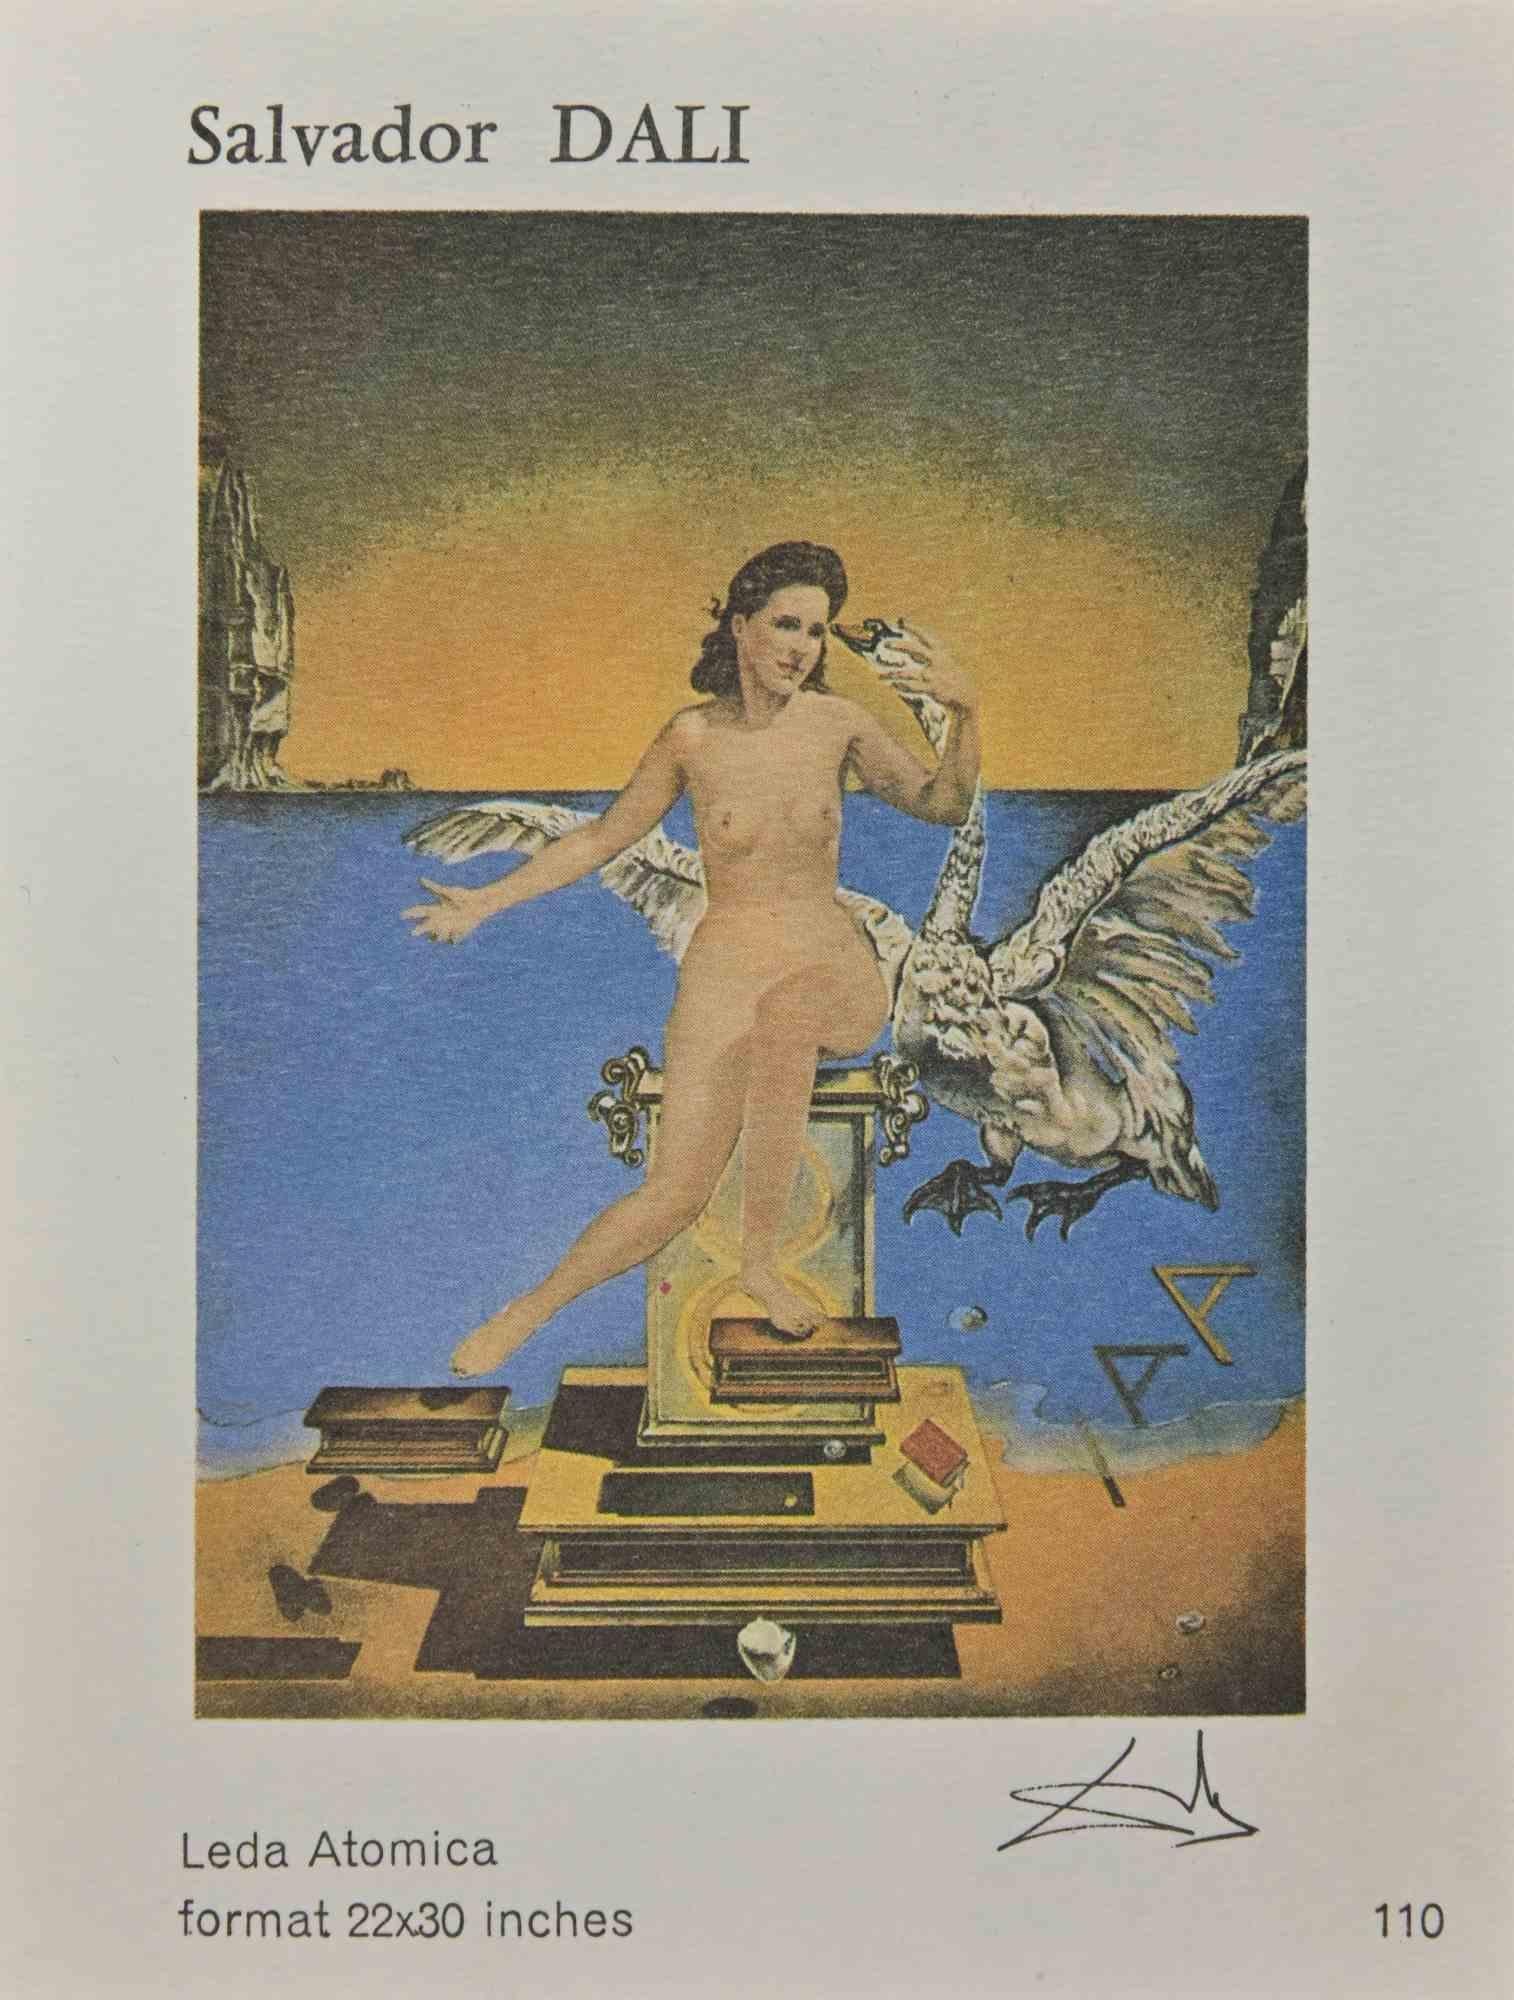 Collection of Vintage Cards After Salvador Dalì - 1980s For Sale 5